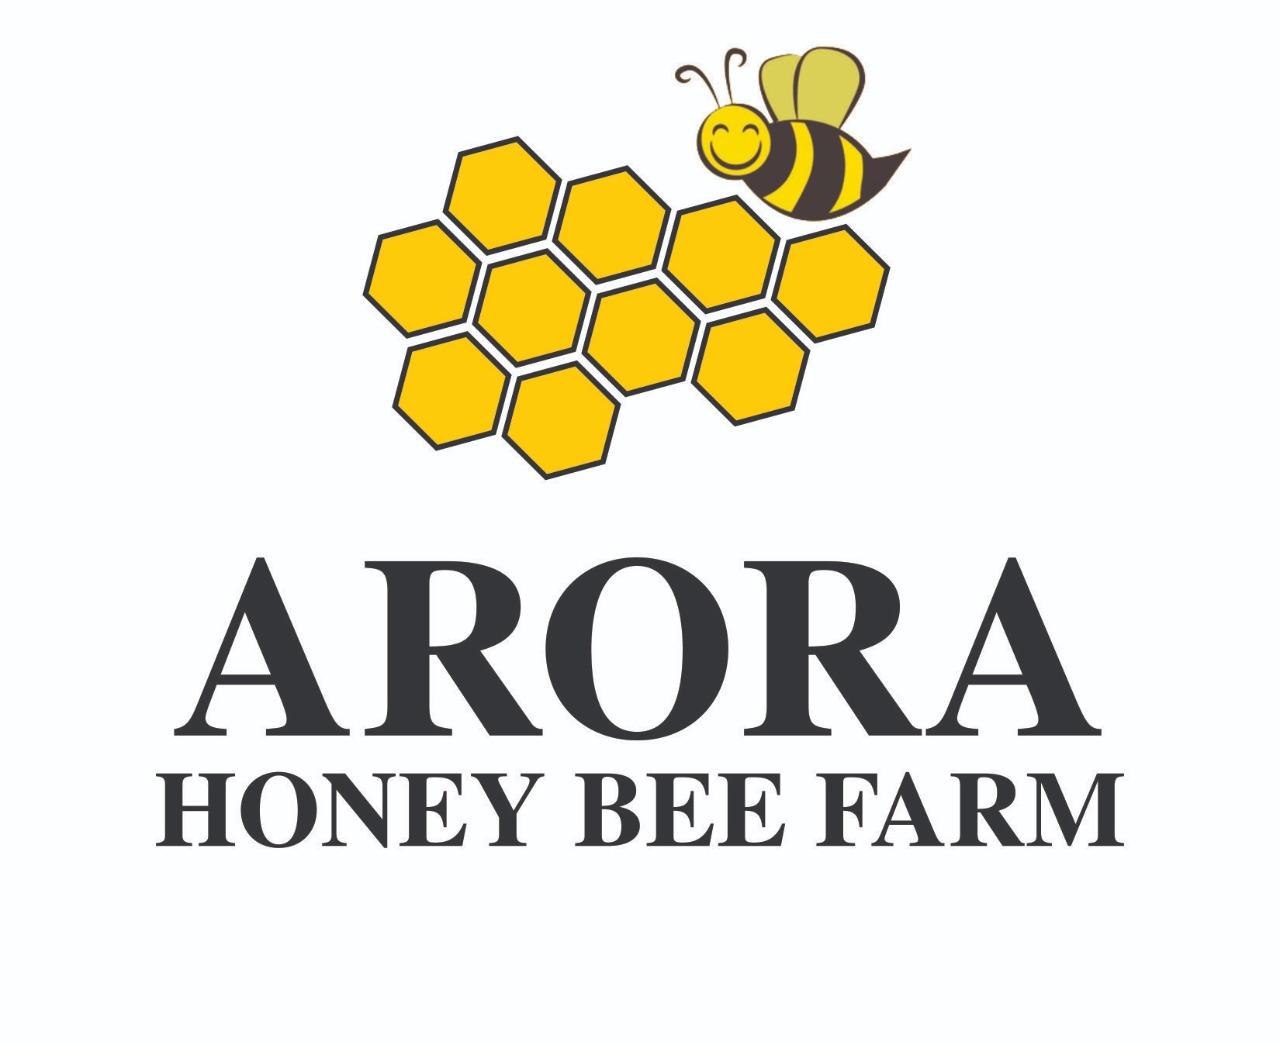 ARORA HONEY BEE FARM